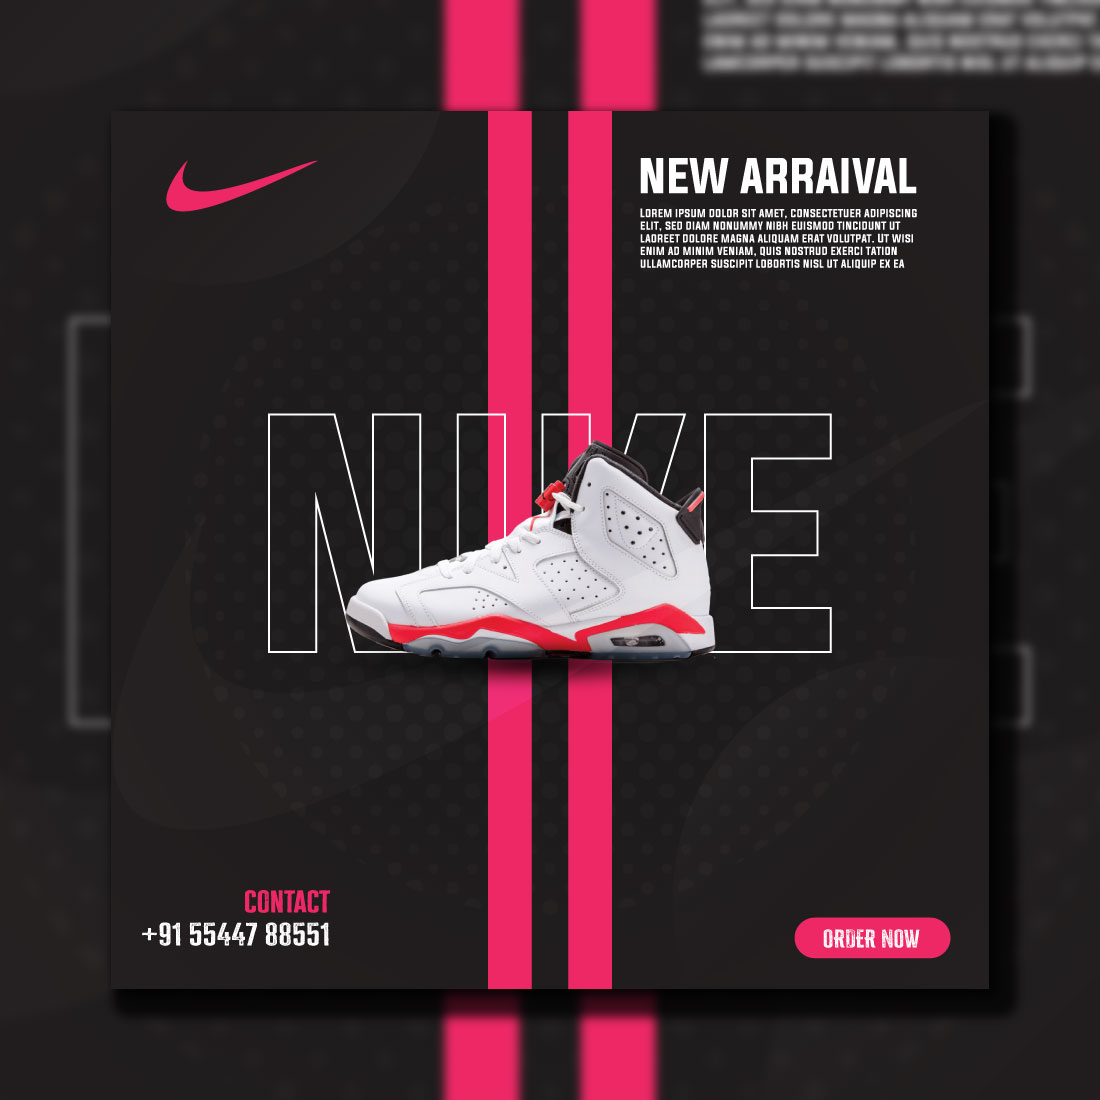 Nike Shoes Social Media Post cover image.